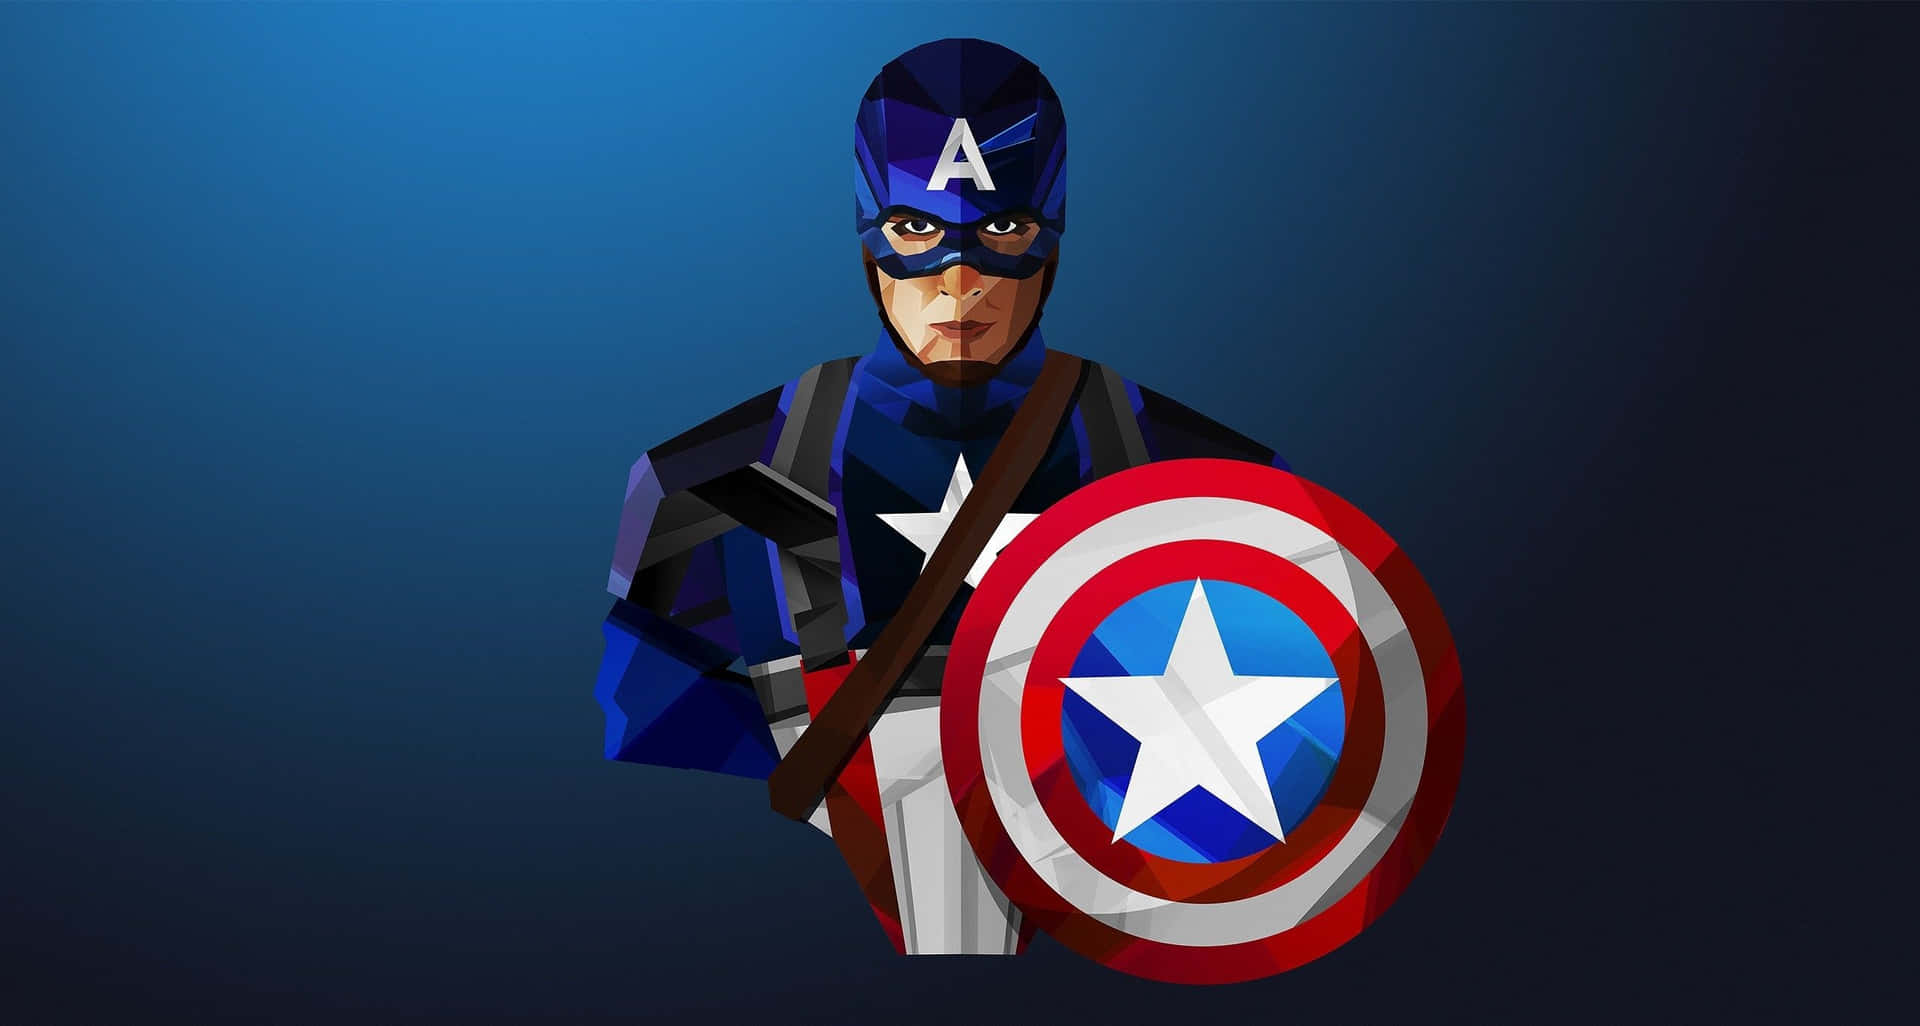 Captain America is always cool Wallpaper